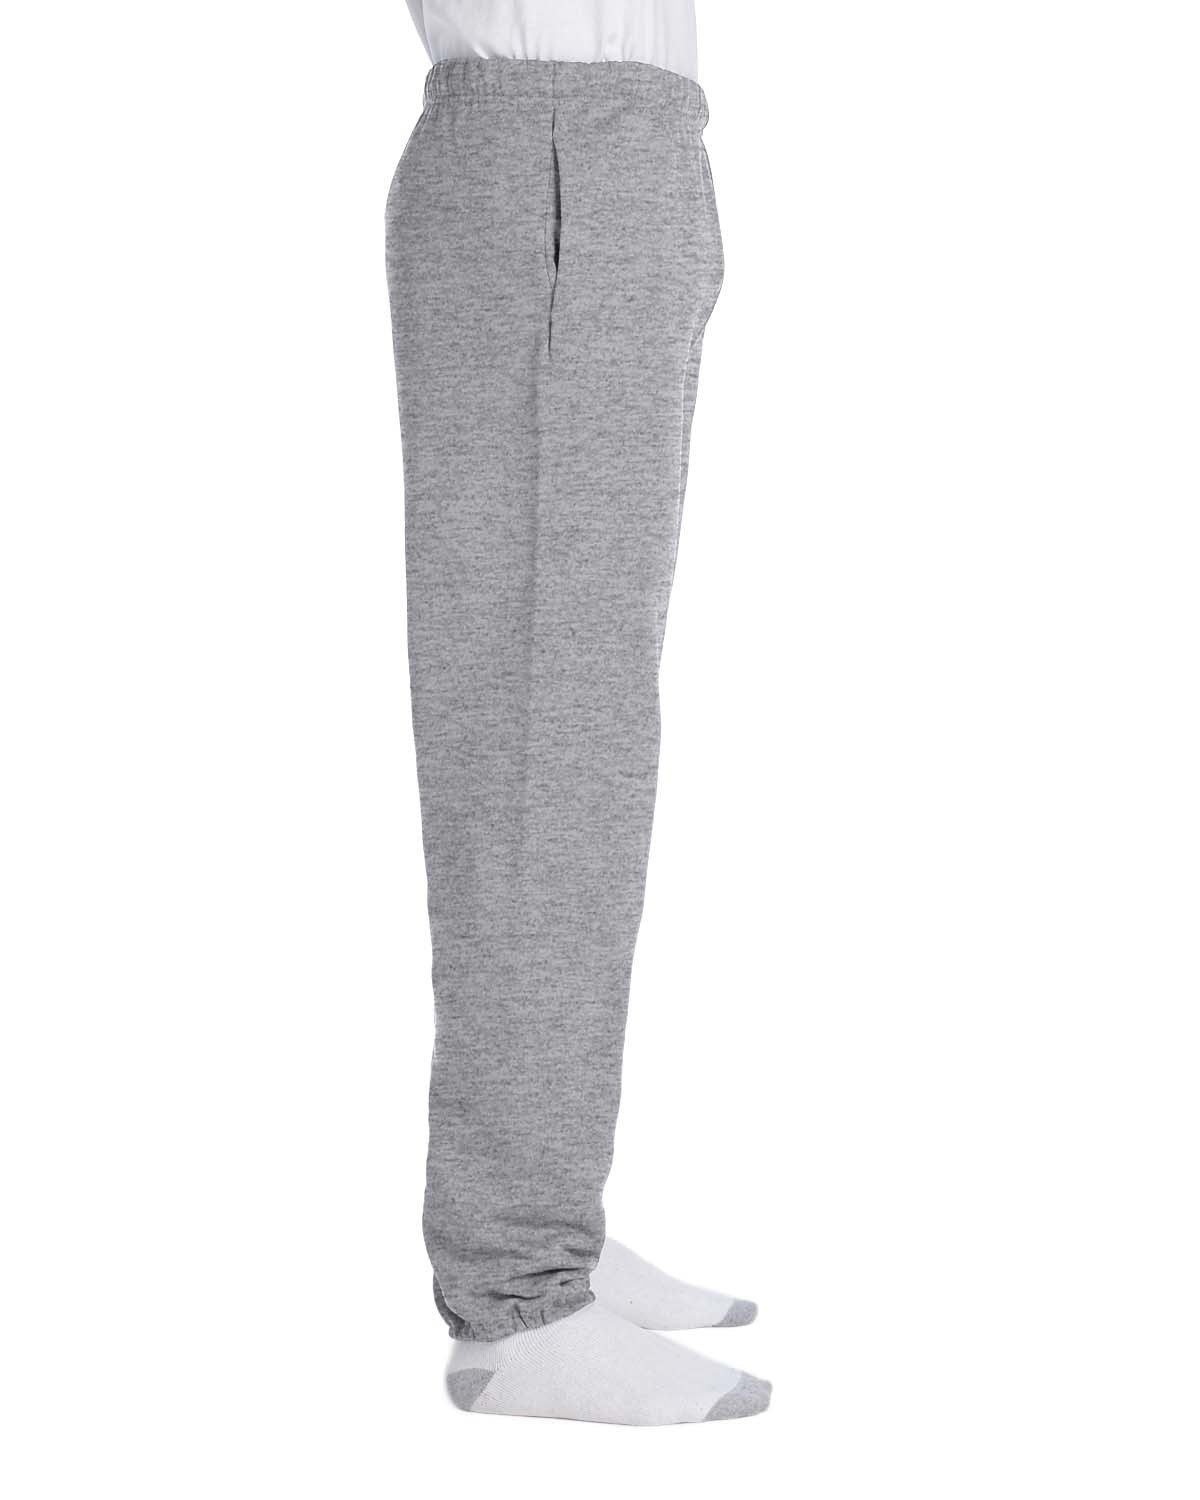 Jerzees Adult Super Sweats® NuBlend® Fleece Pocketed Sweatpants